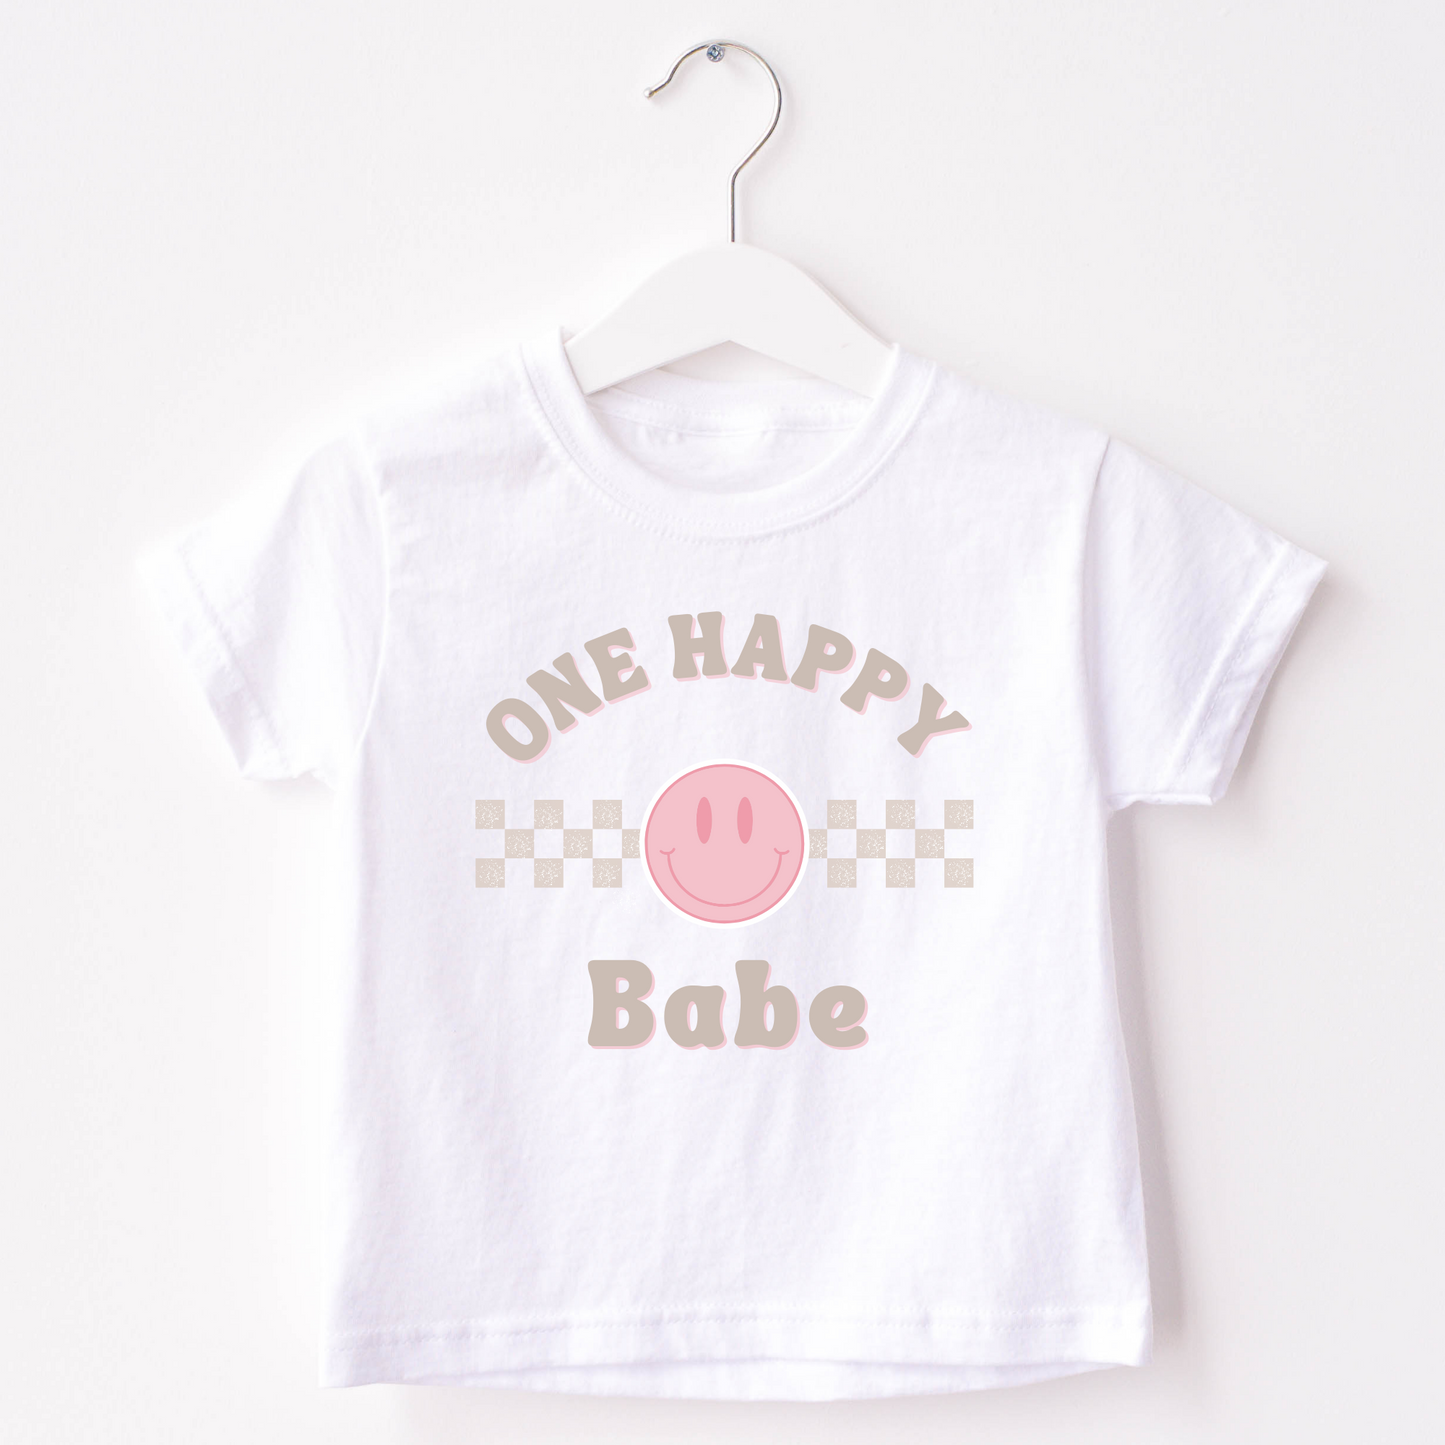 One Happy Girl Birthday Shirt - One Happy Girl - One Happy Babe - One Happy Girl Birthday Themed Shirt - One Happy Girl Party - Family shirt